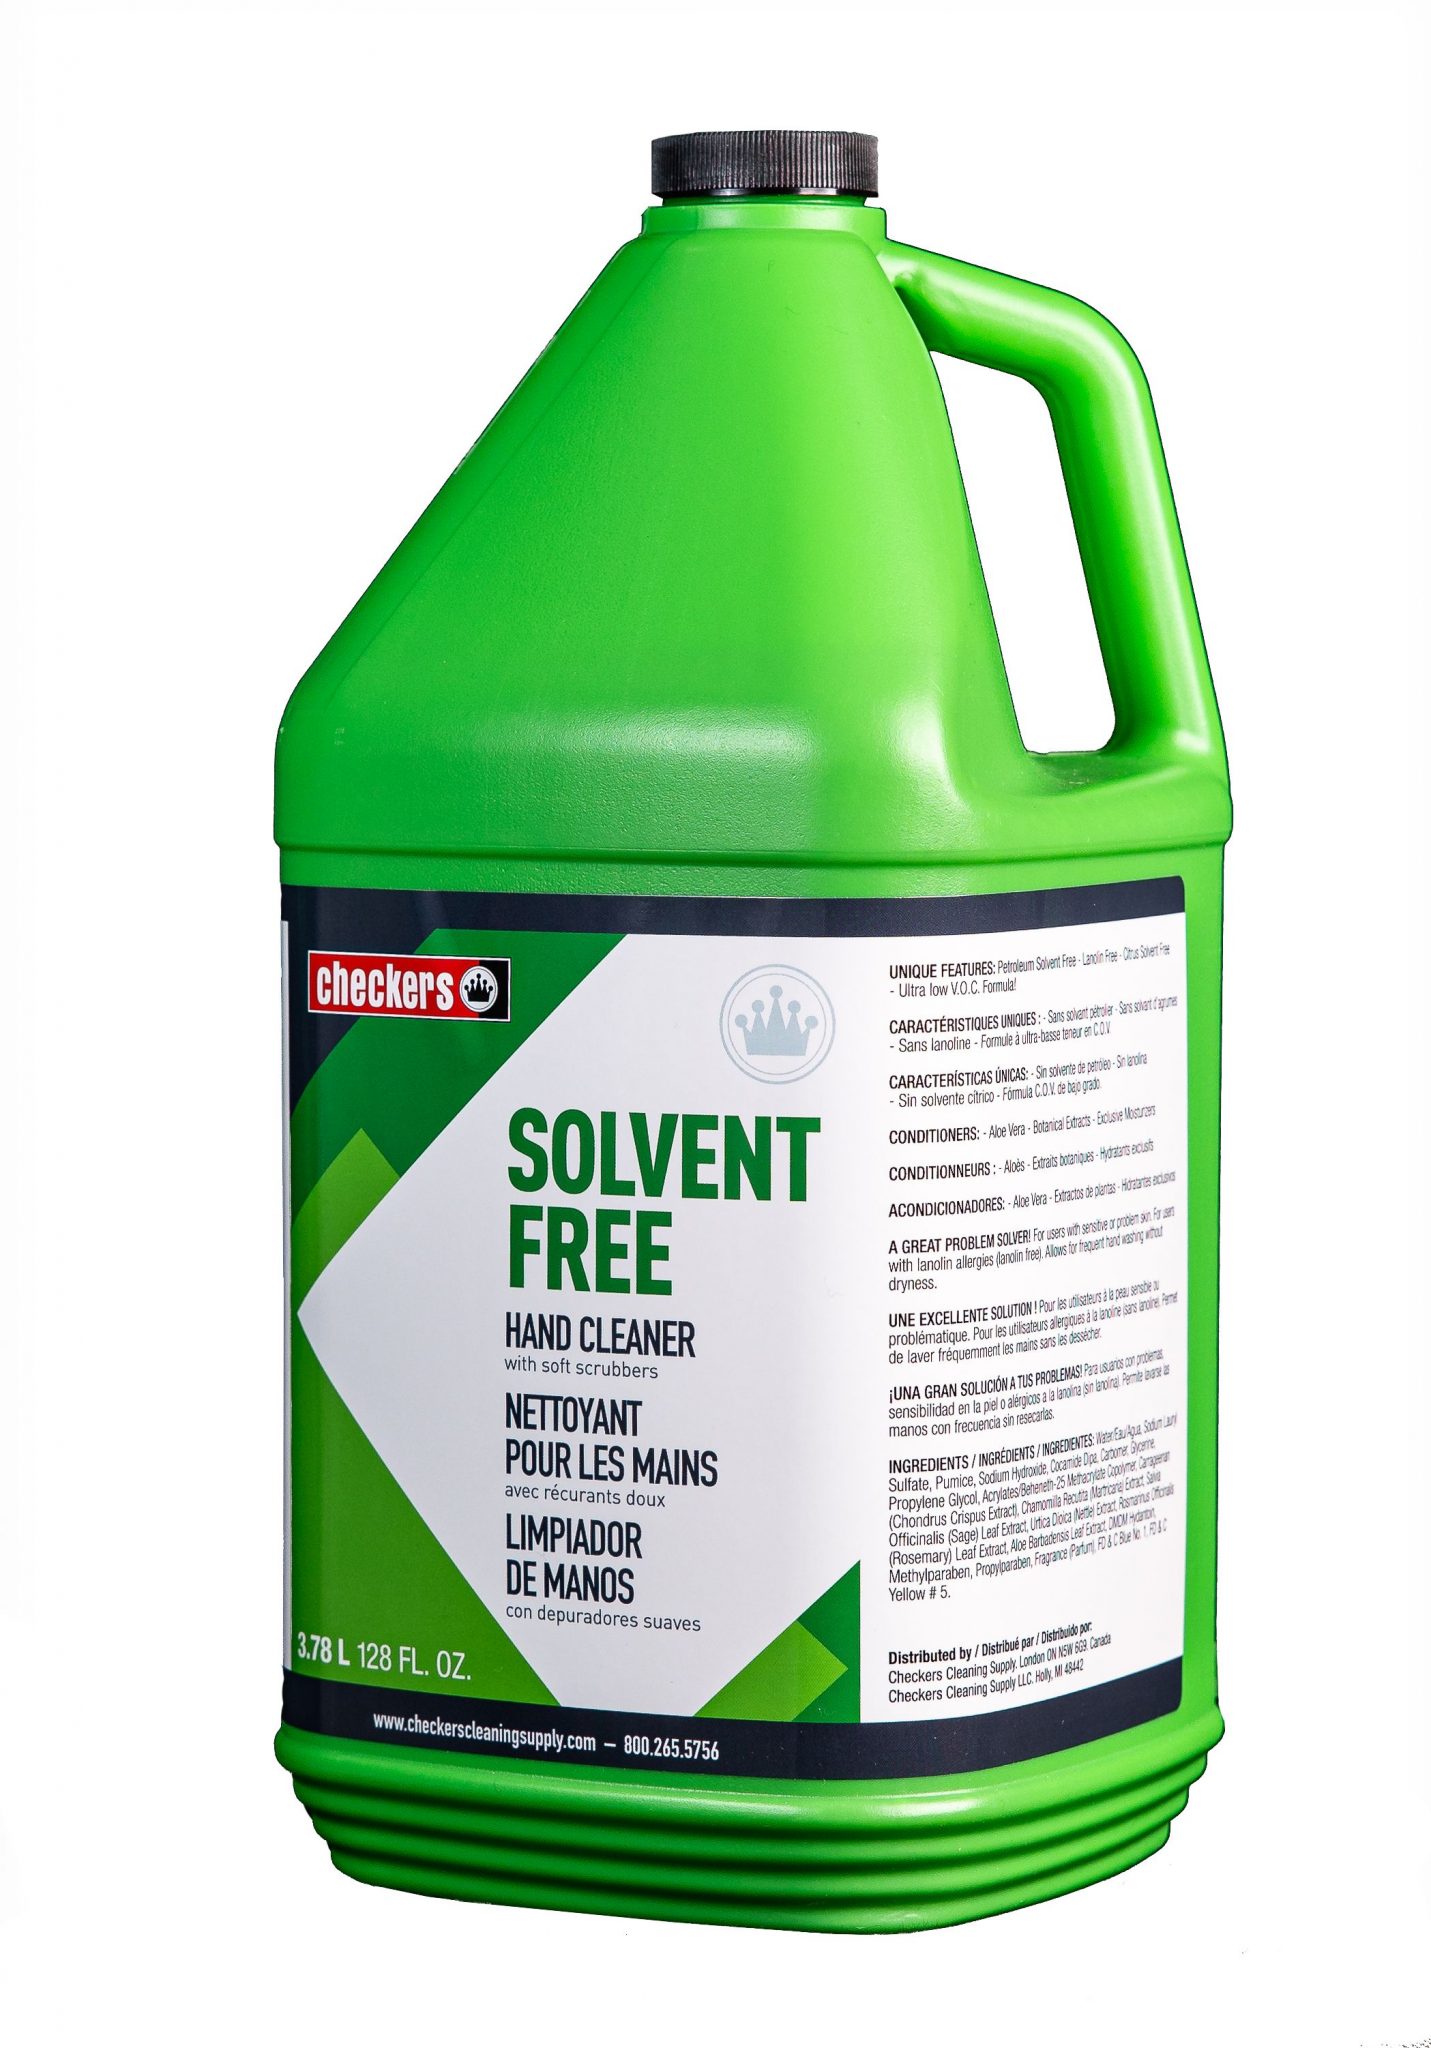 16 Oz TF Isopropyl Alcohol 99% USP Grade Sanitizing Disinfecting w/Spray  Nozzle